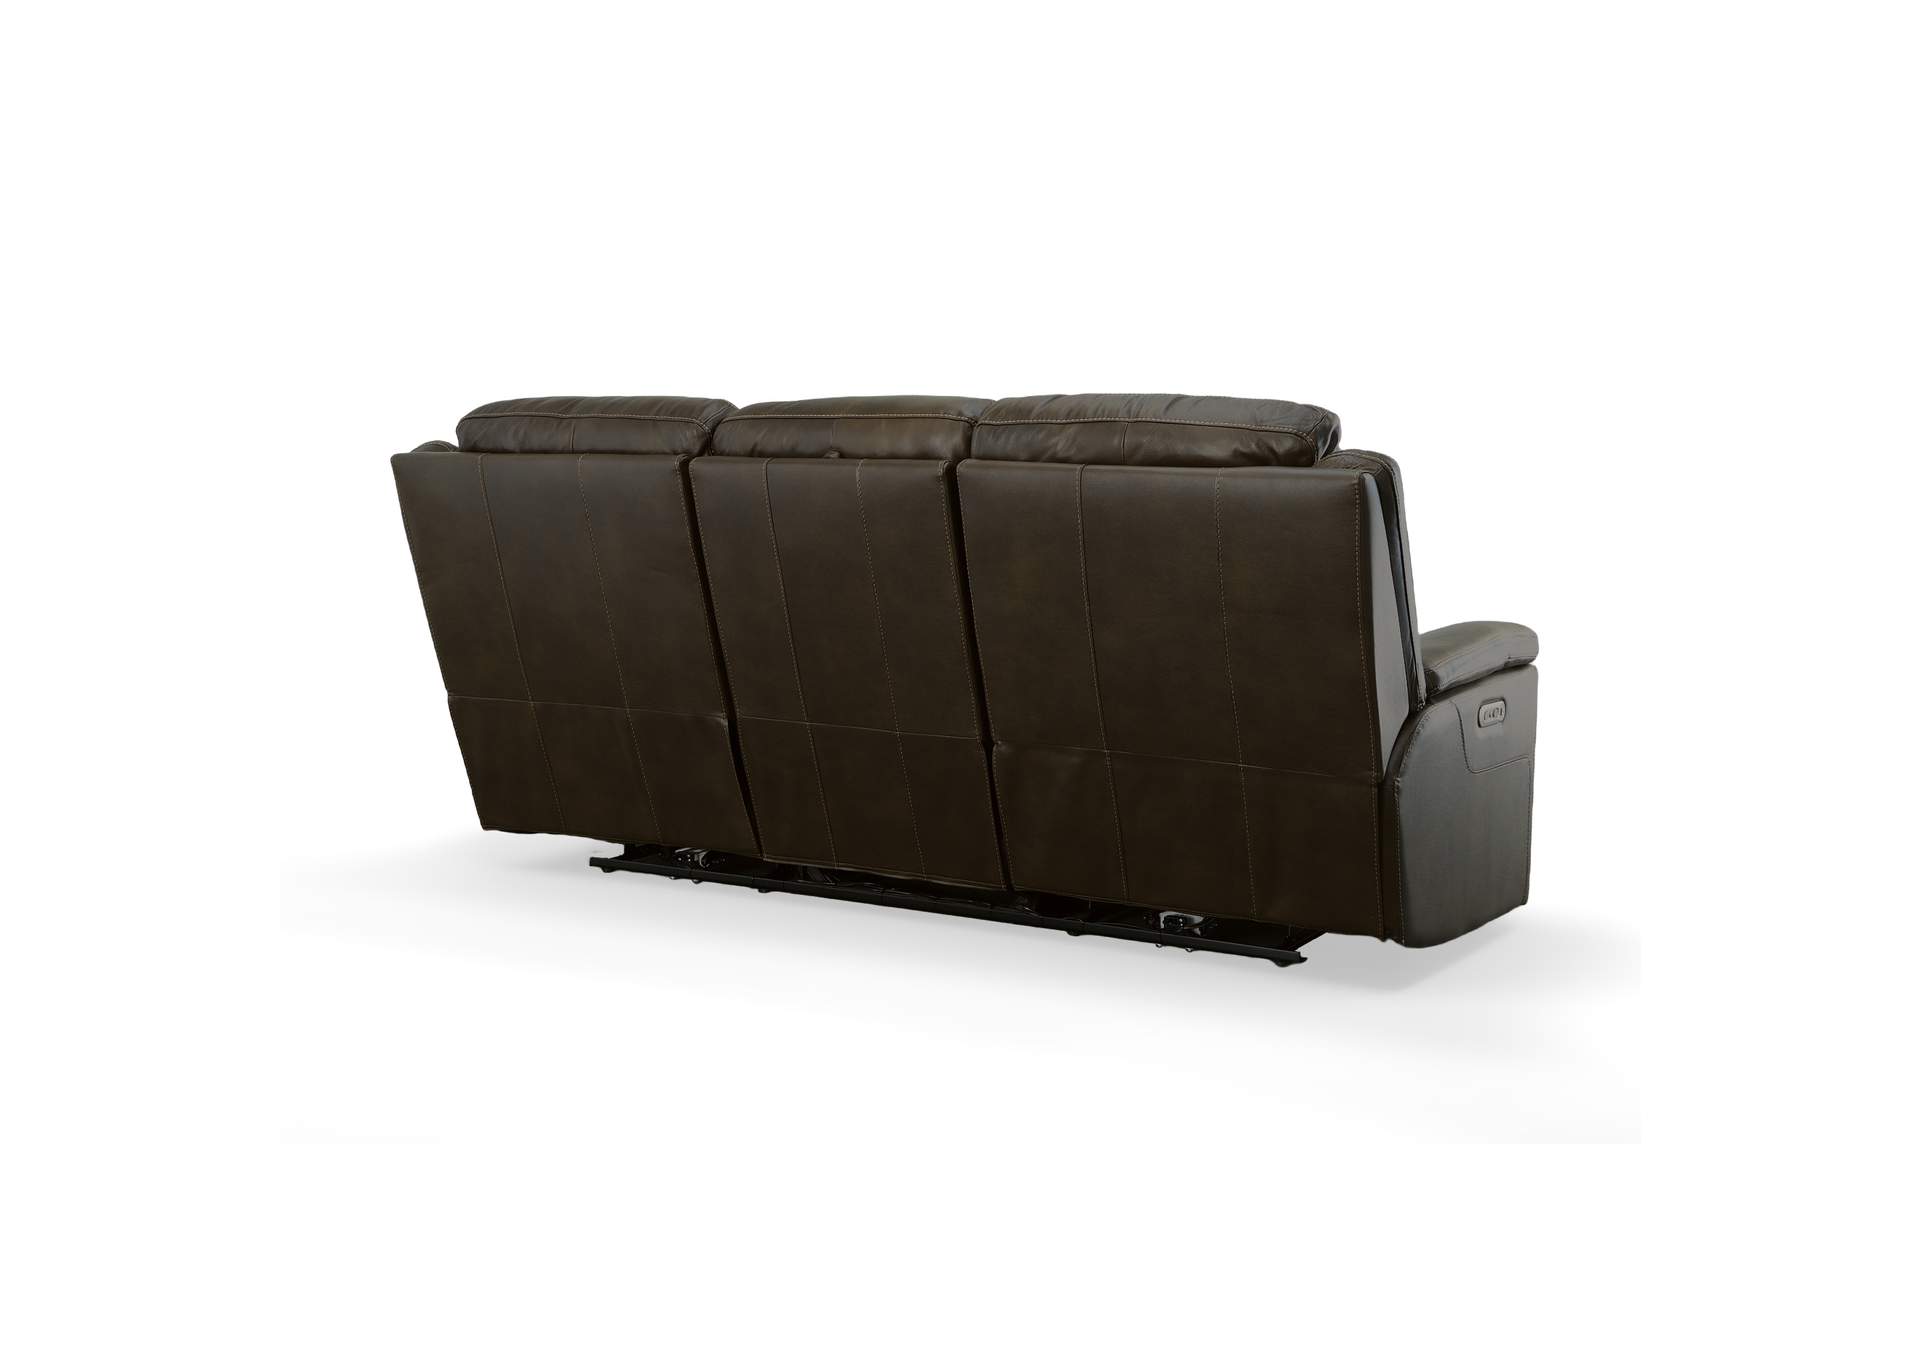 Chance Power Reclining Sofa With Power Headrests,Flexsteel